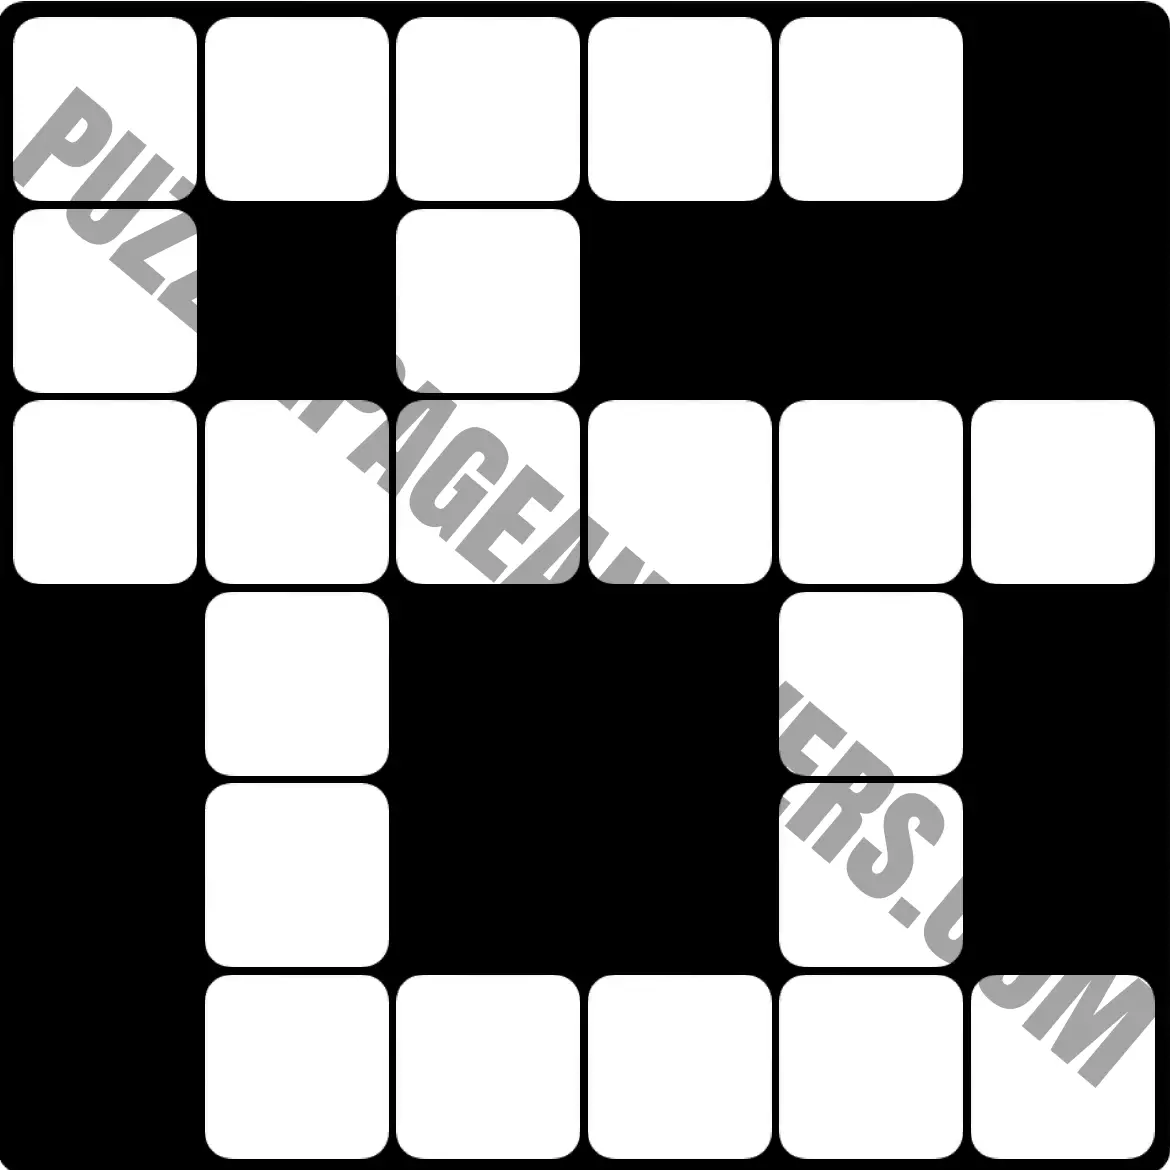 Puzzle Page Word Slide June 13 2019 PuzzlePageAnswers com